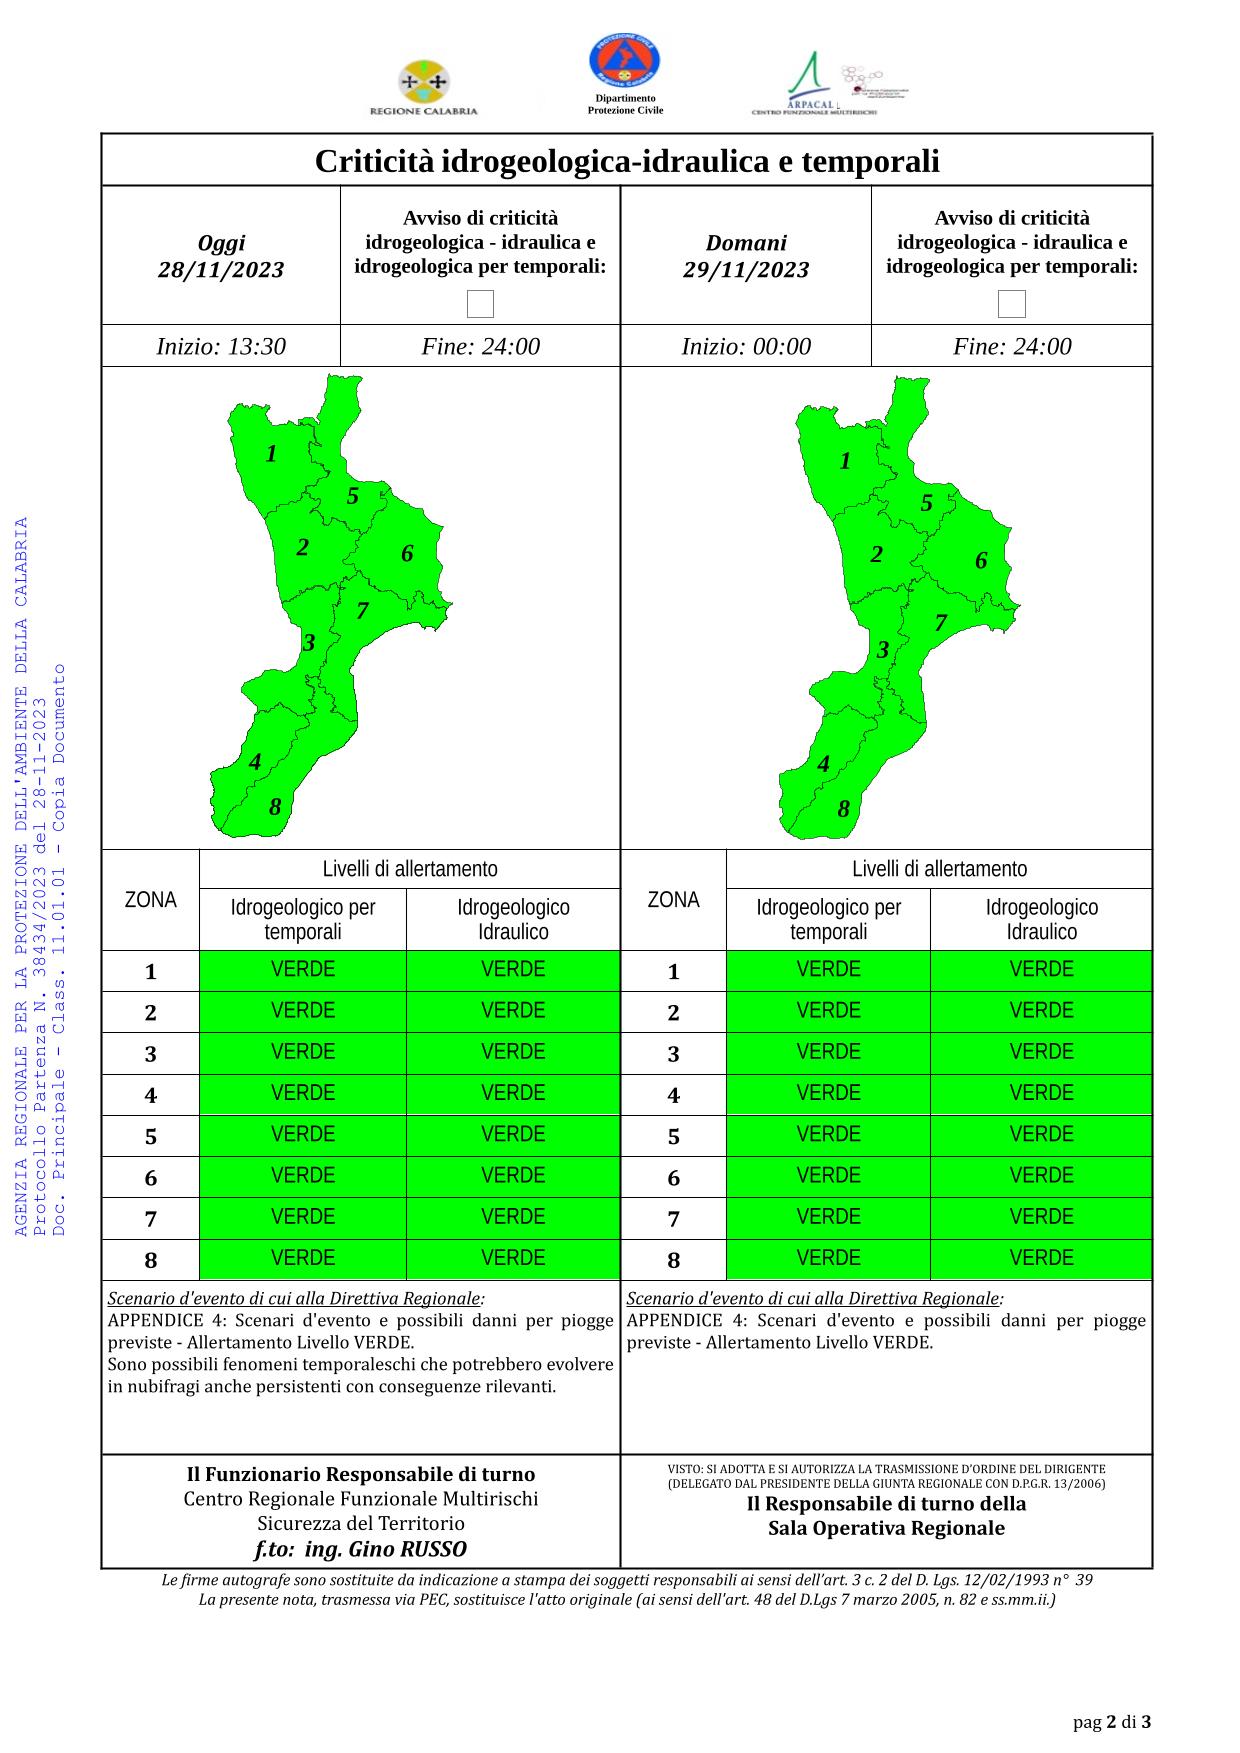 Criticità idrogeologica-idraulica e temporali in Calabria 28-11-2023